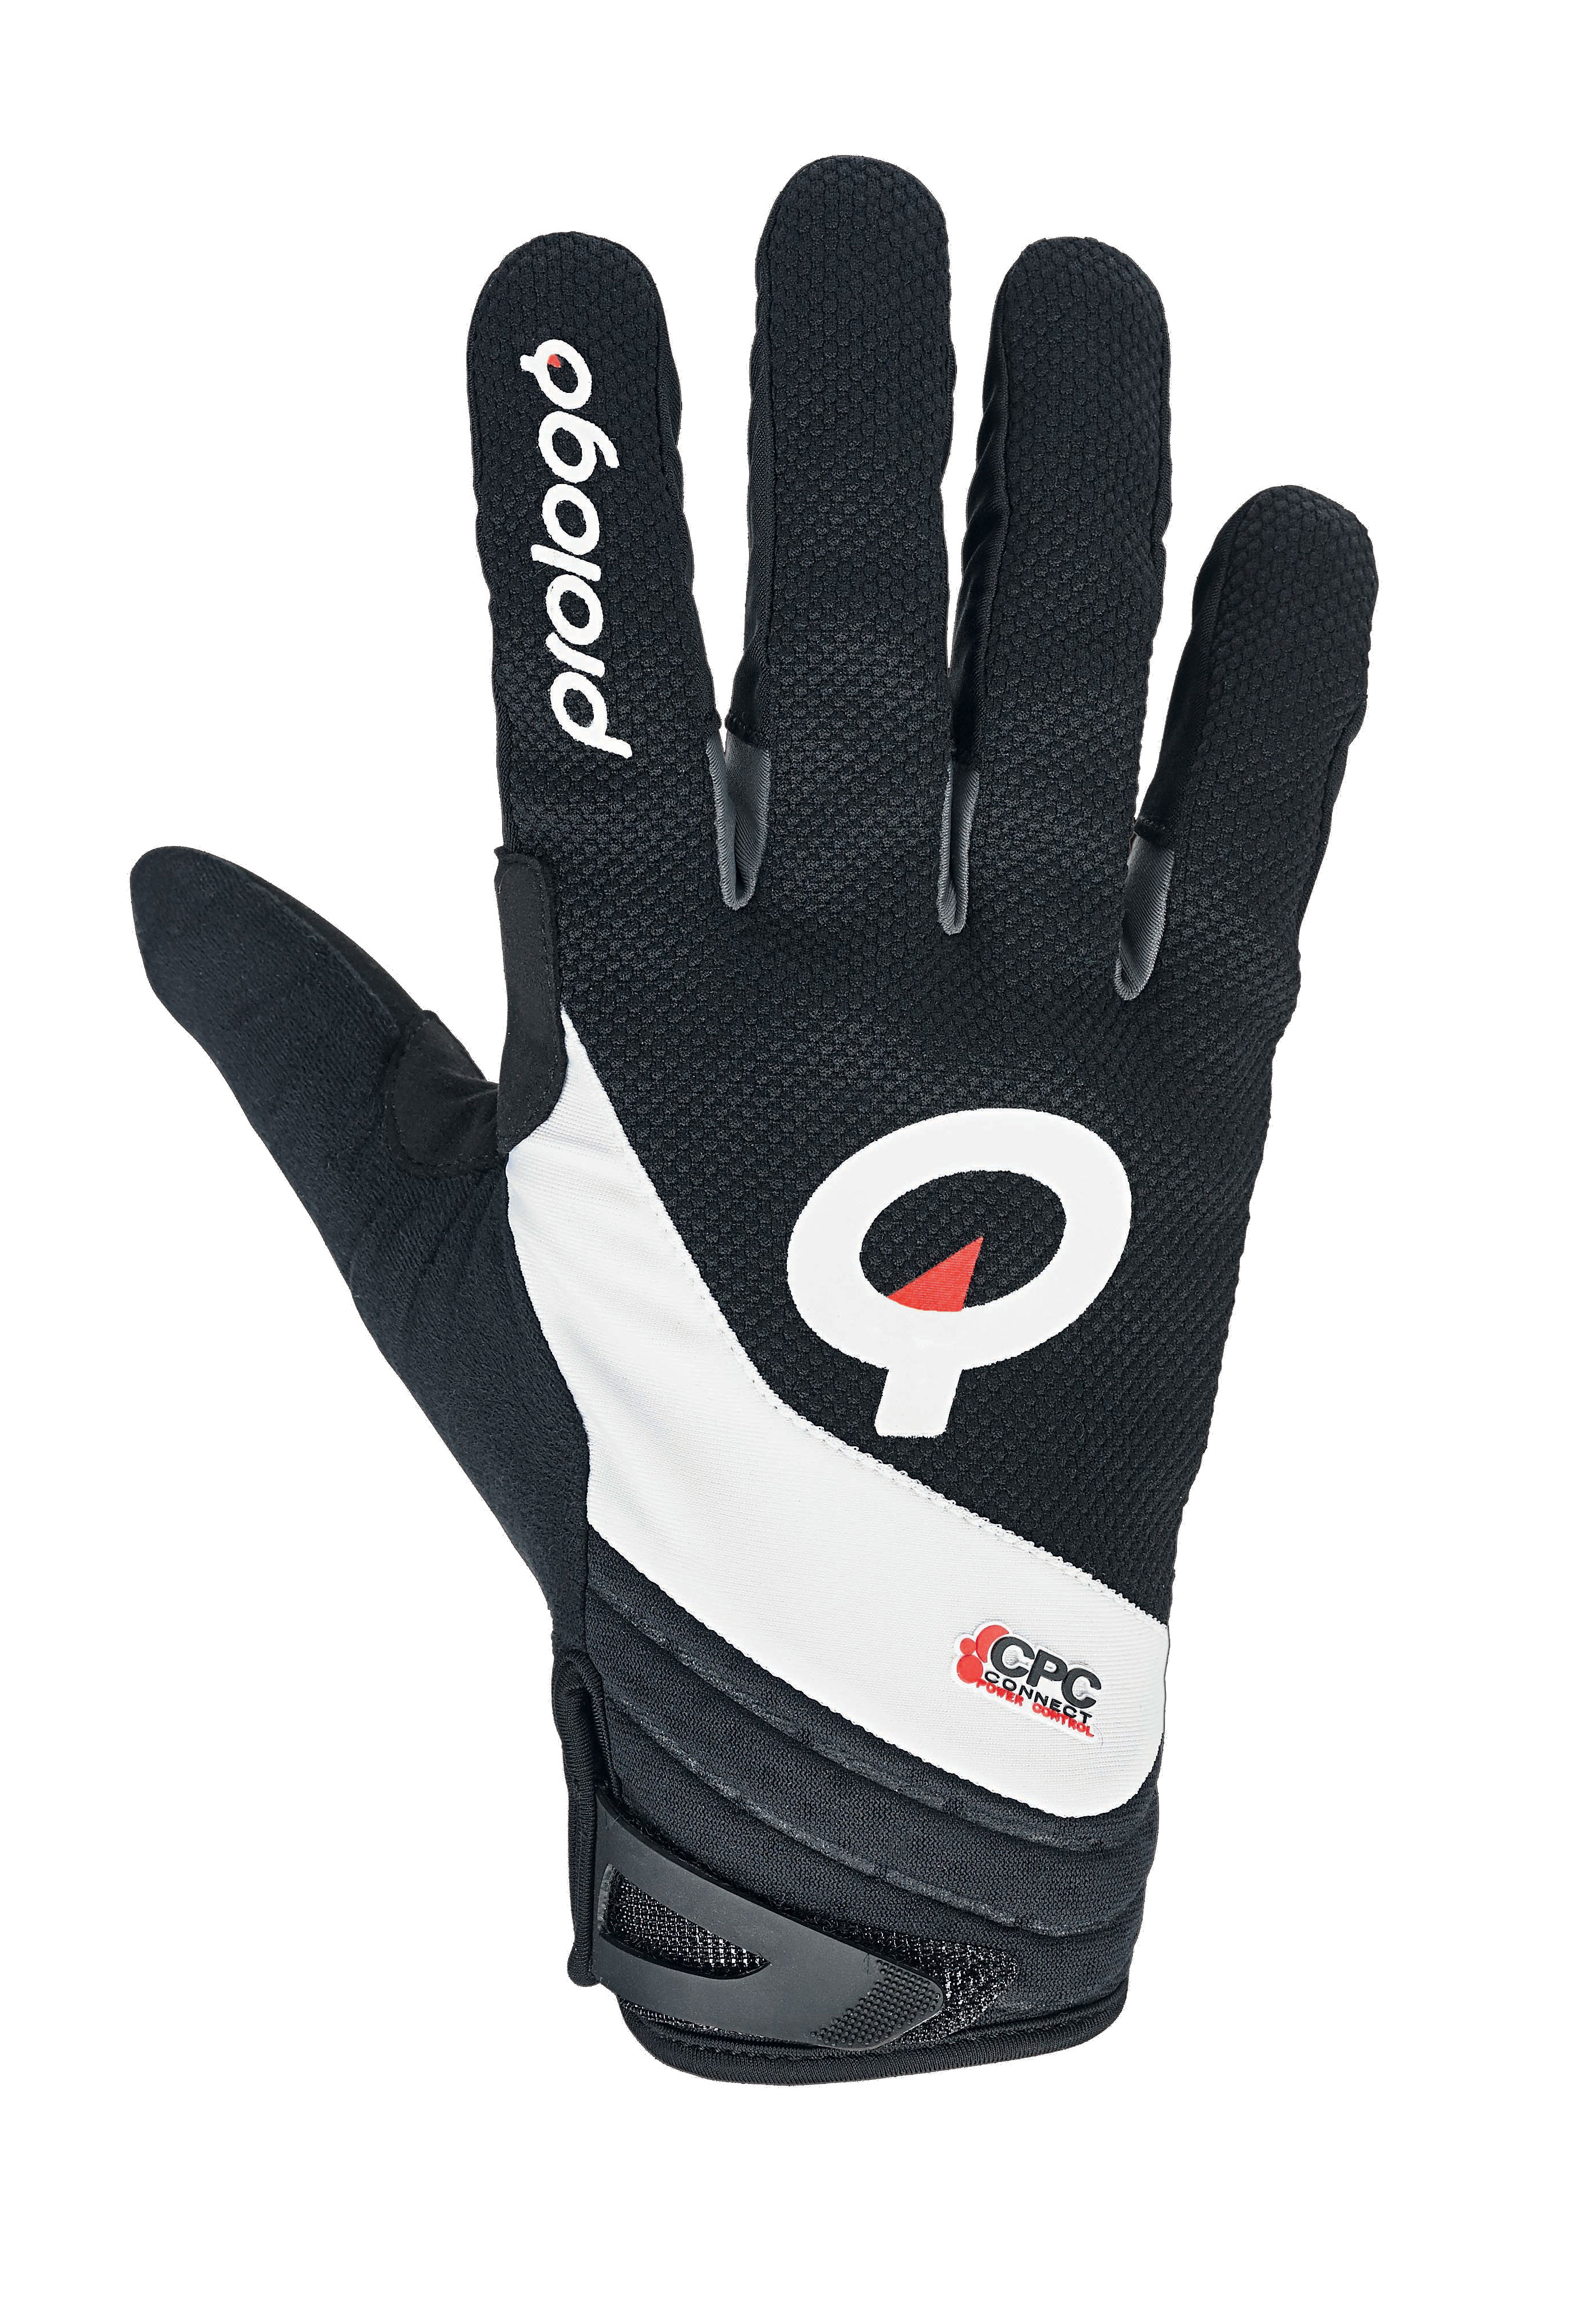 prologo winter gloves